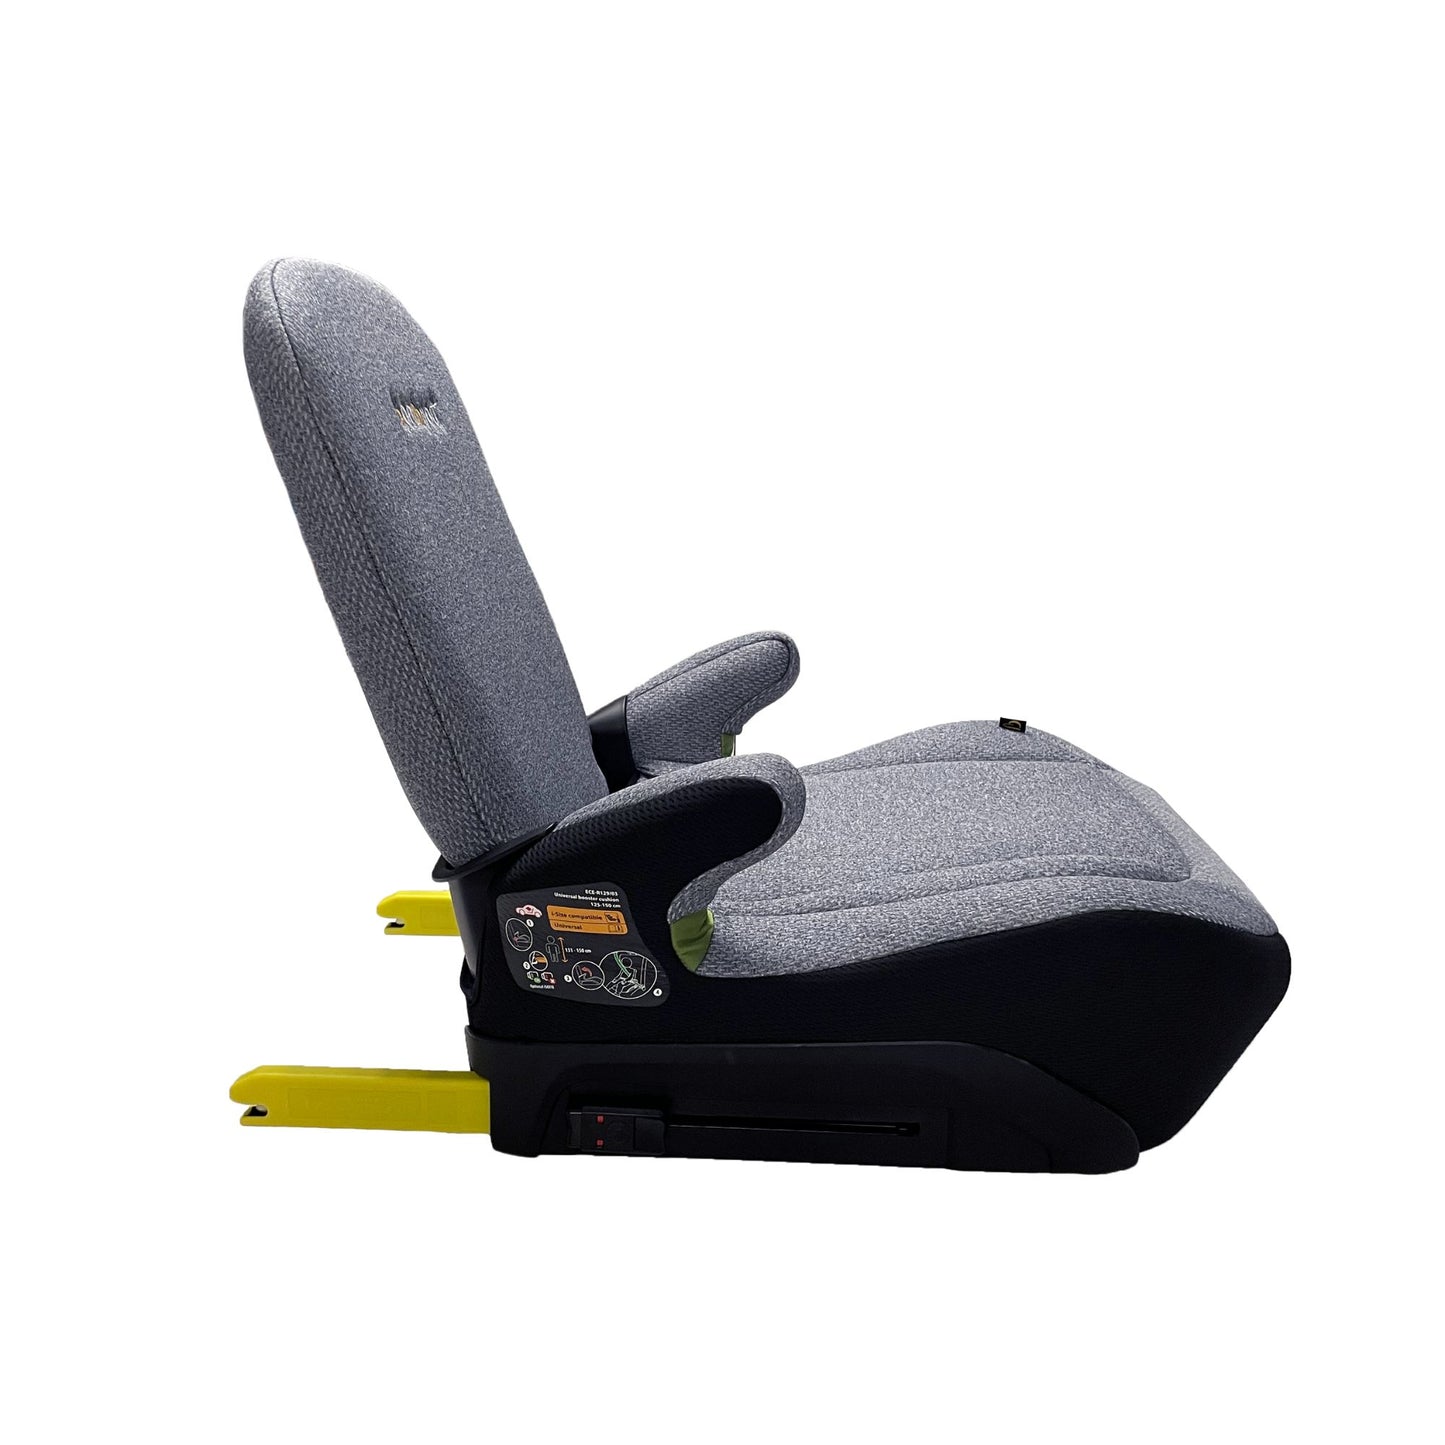 Bonbijou Junior Booster Seat (i-size)